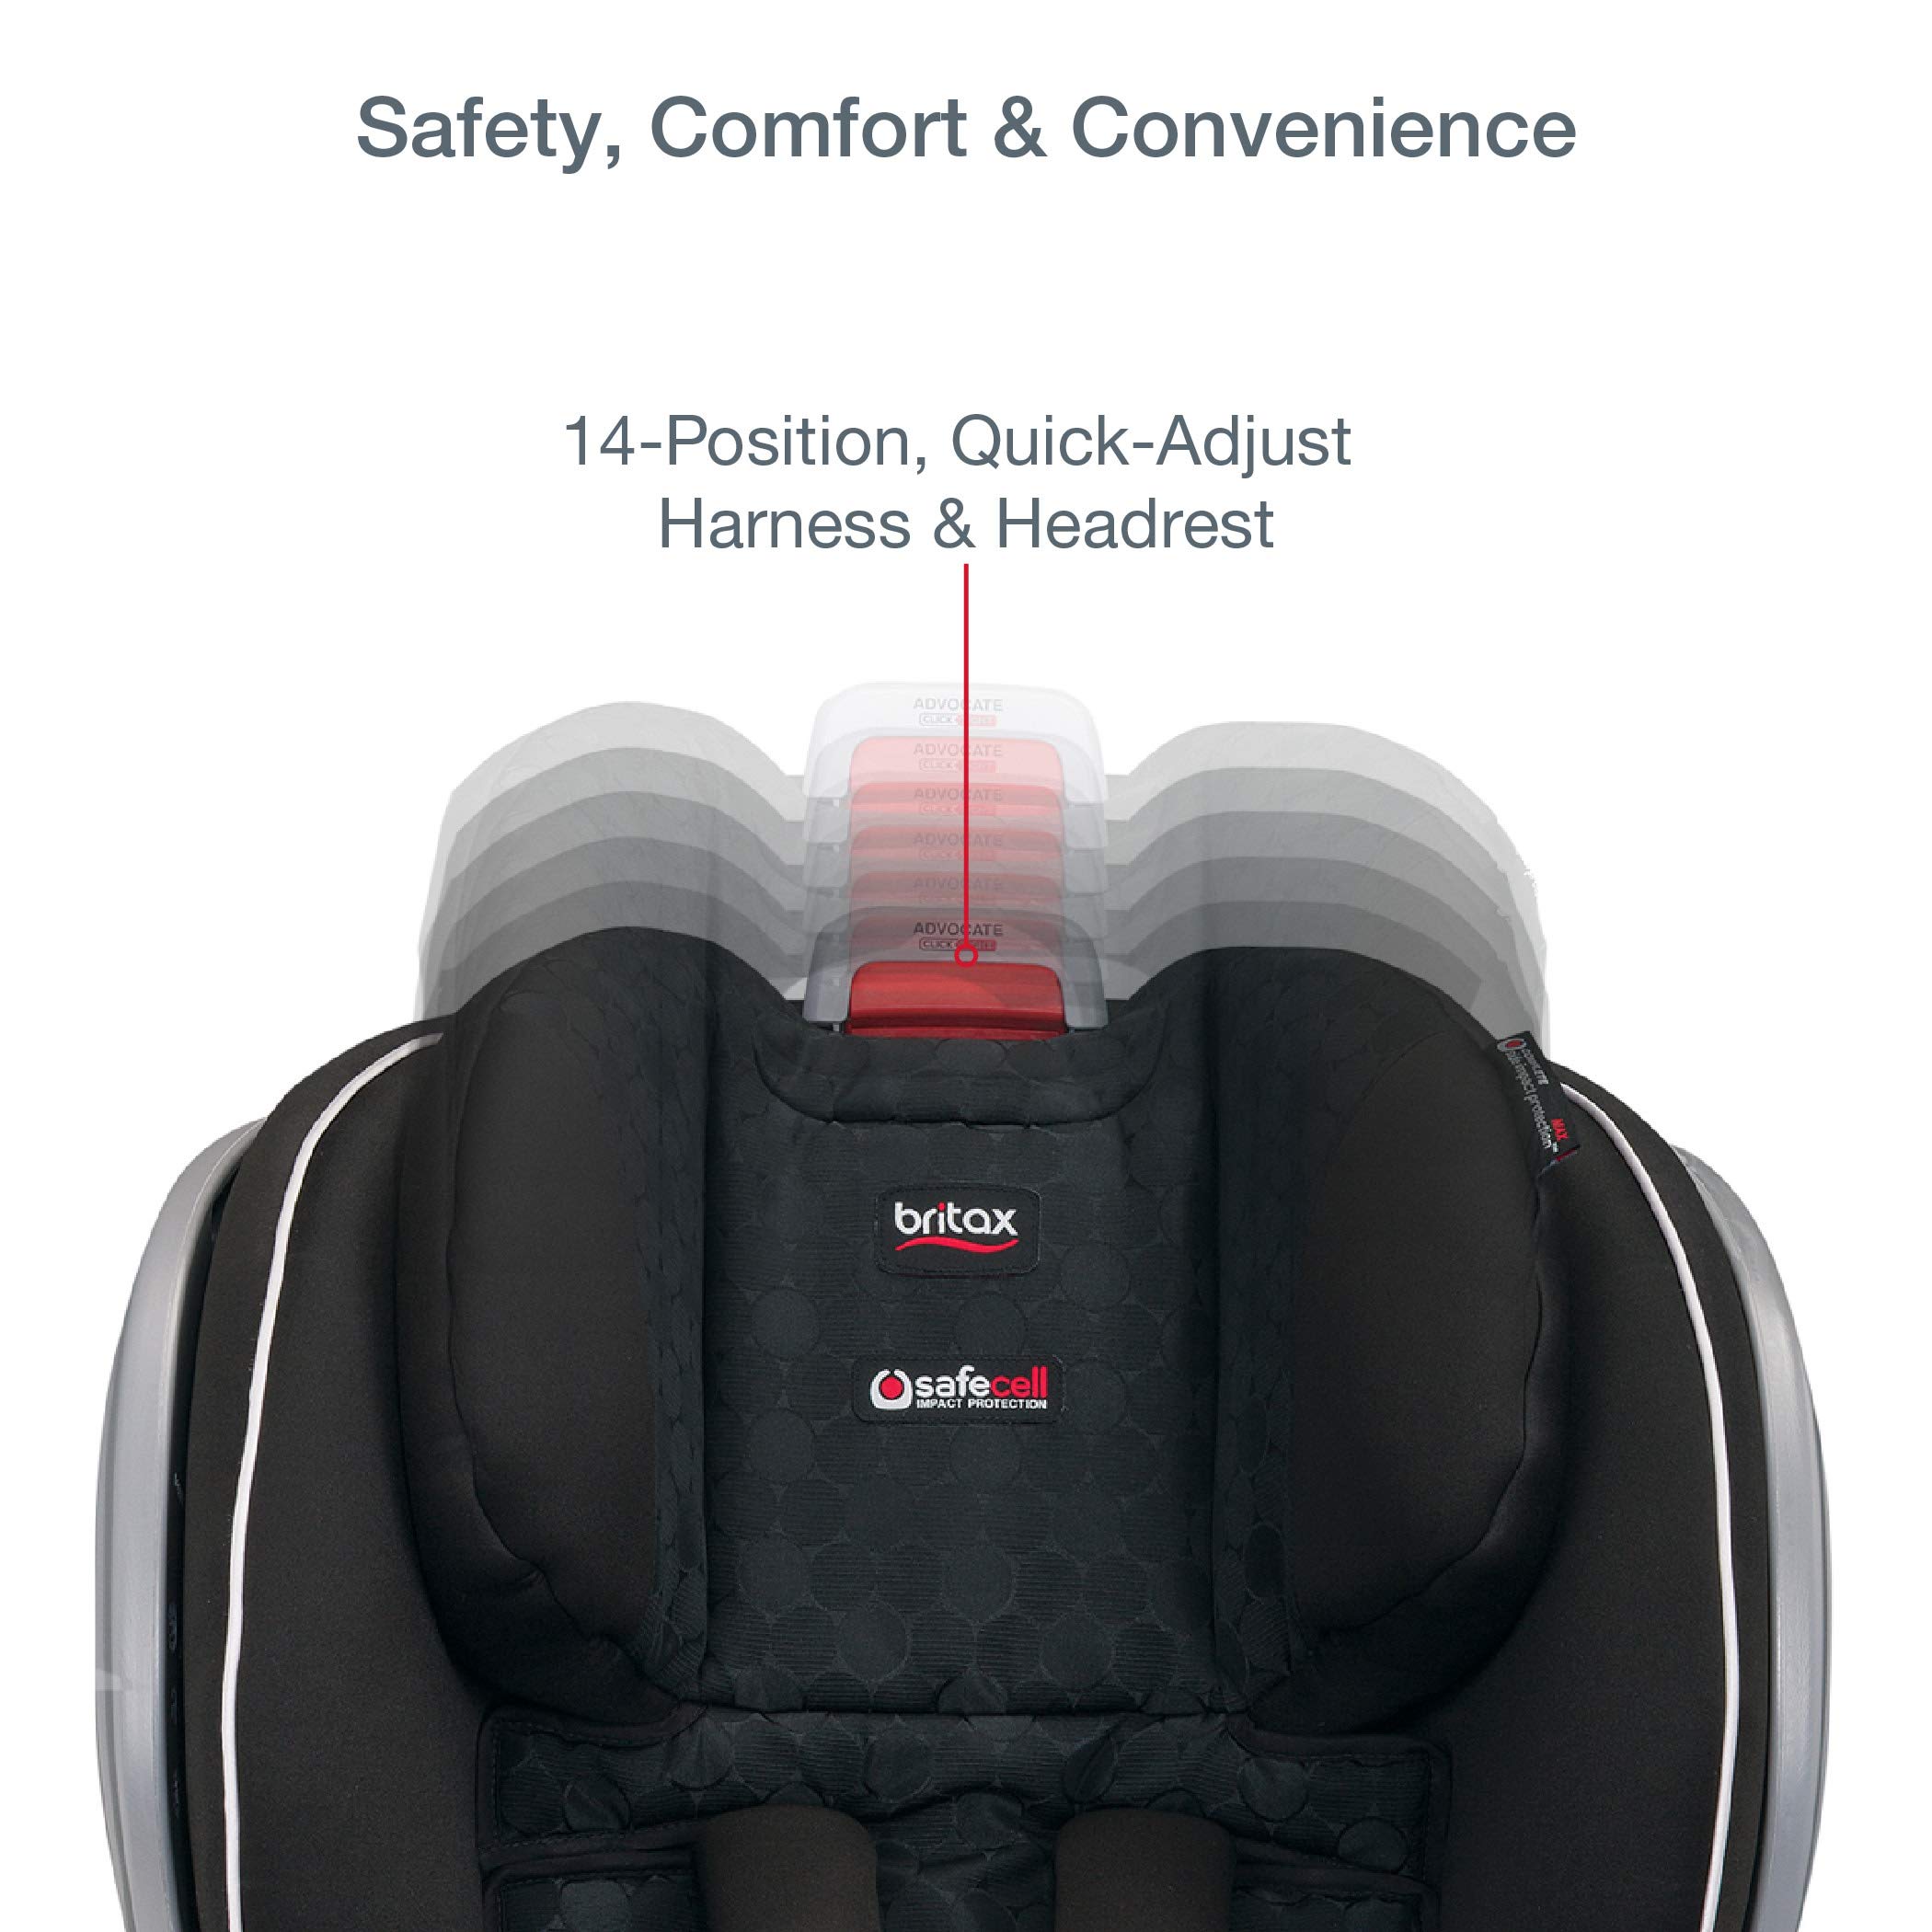 Britax Advocate ClickTight Convertible Car Seat, Mosaic